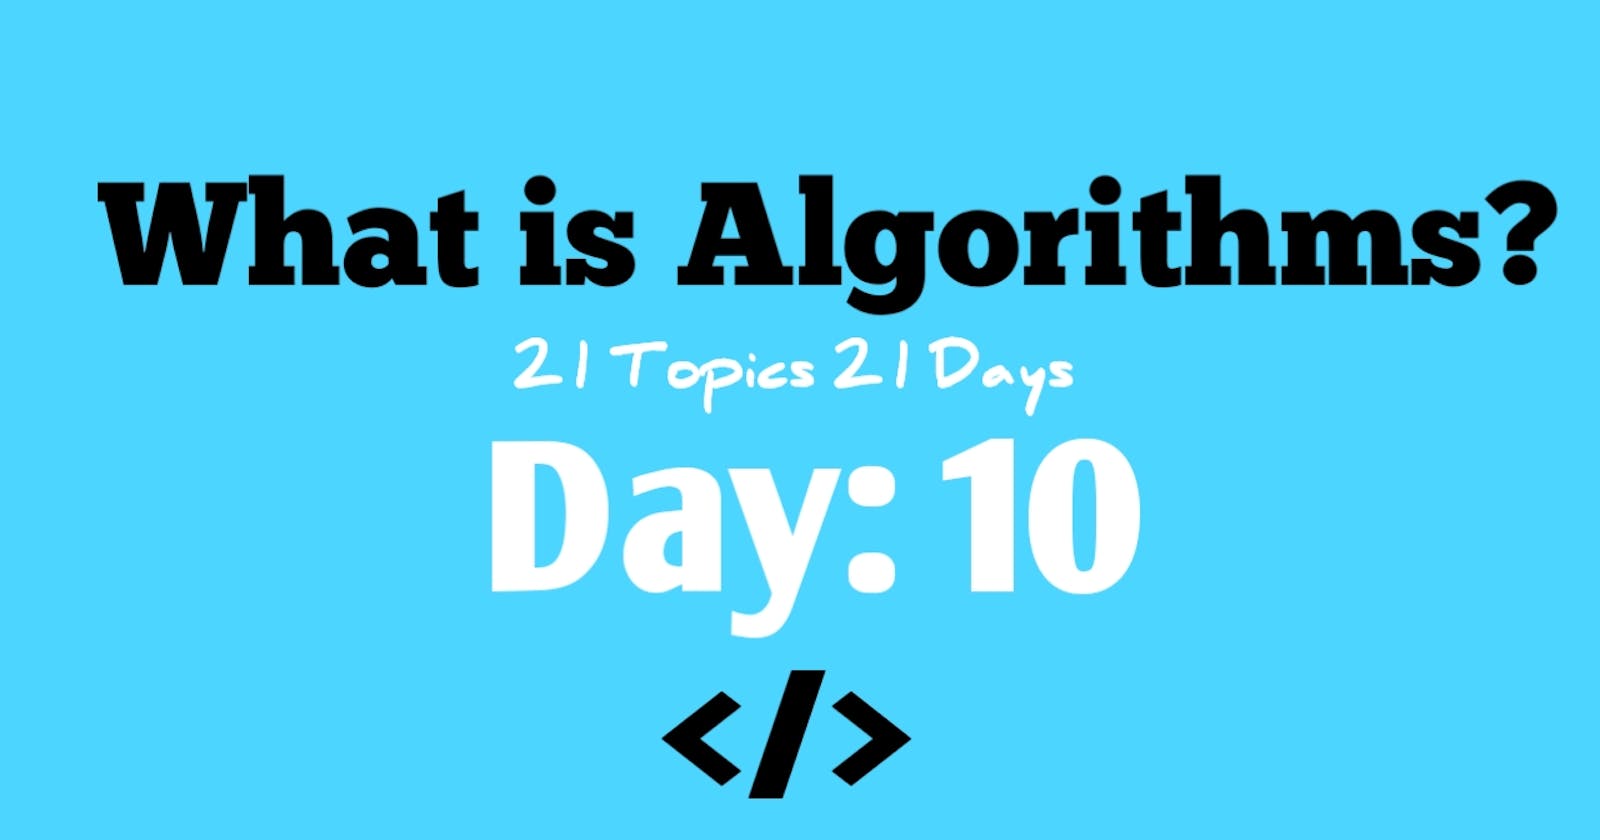 What is Algorithm?